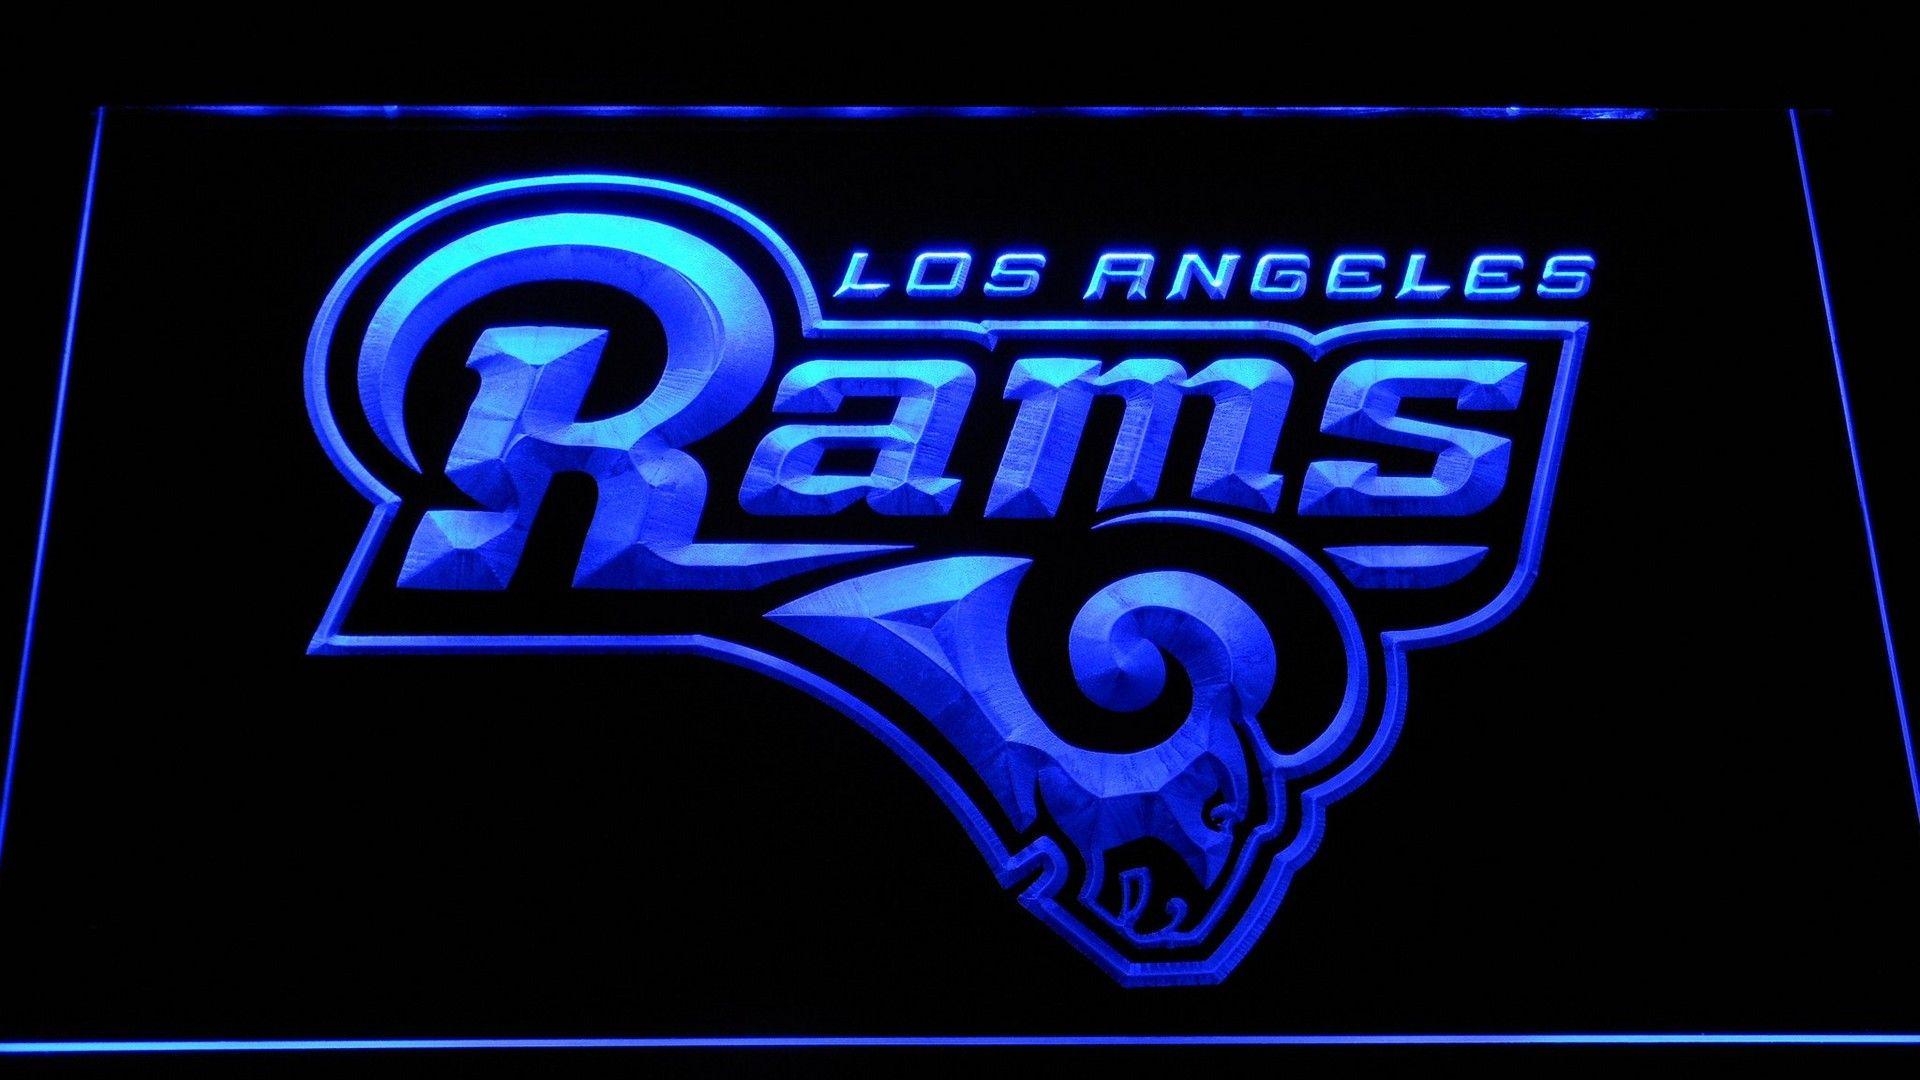 Los Angeles Rams Wallpaper NFL Football Wallpaper. Ram wallpaper, Nfl football wallpaper, Los angeles rams